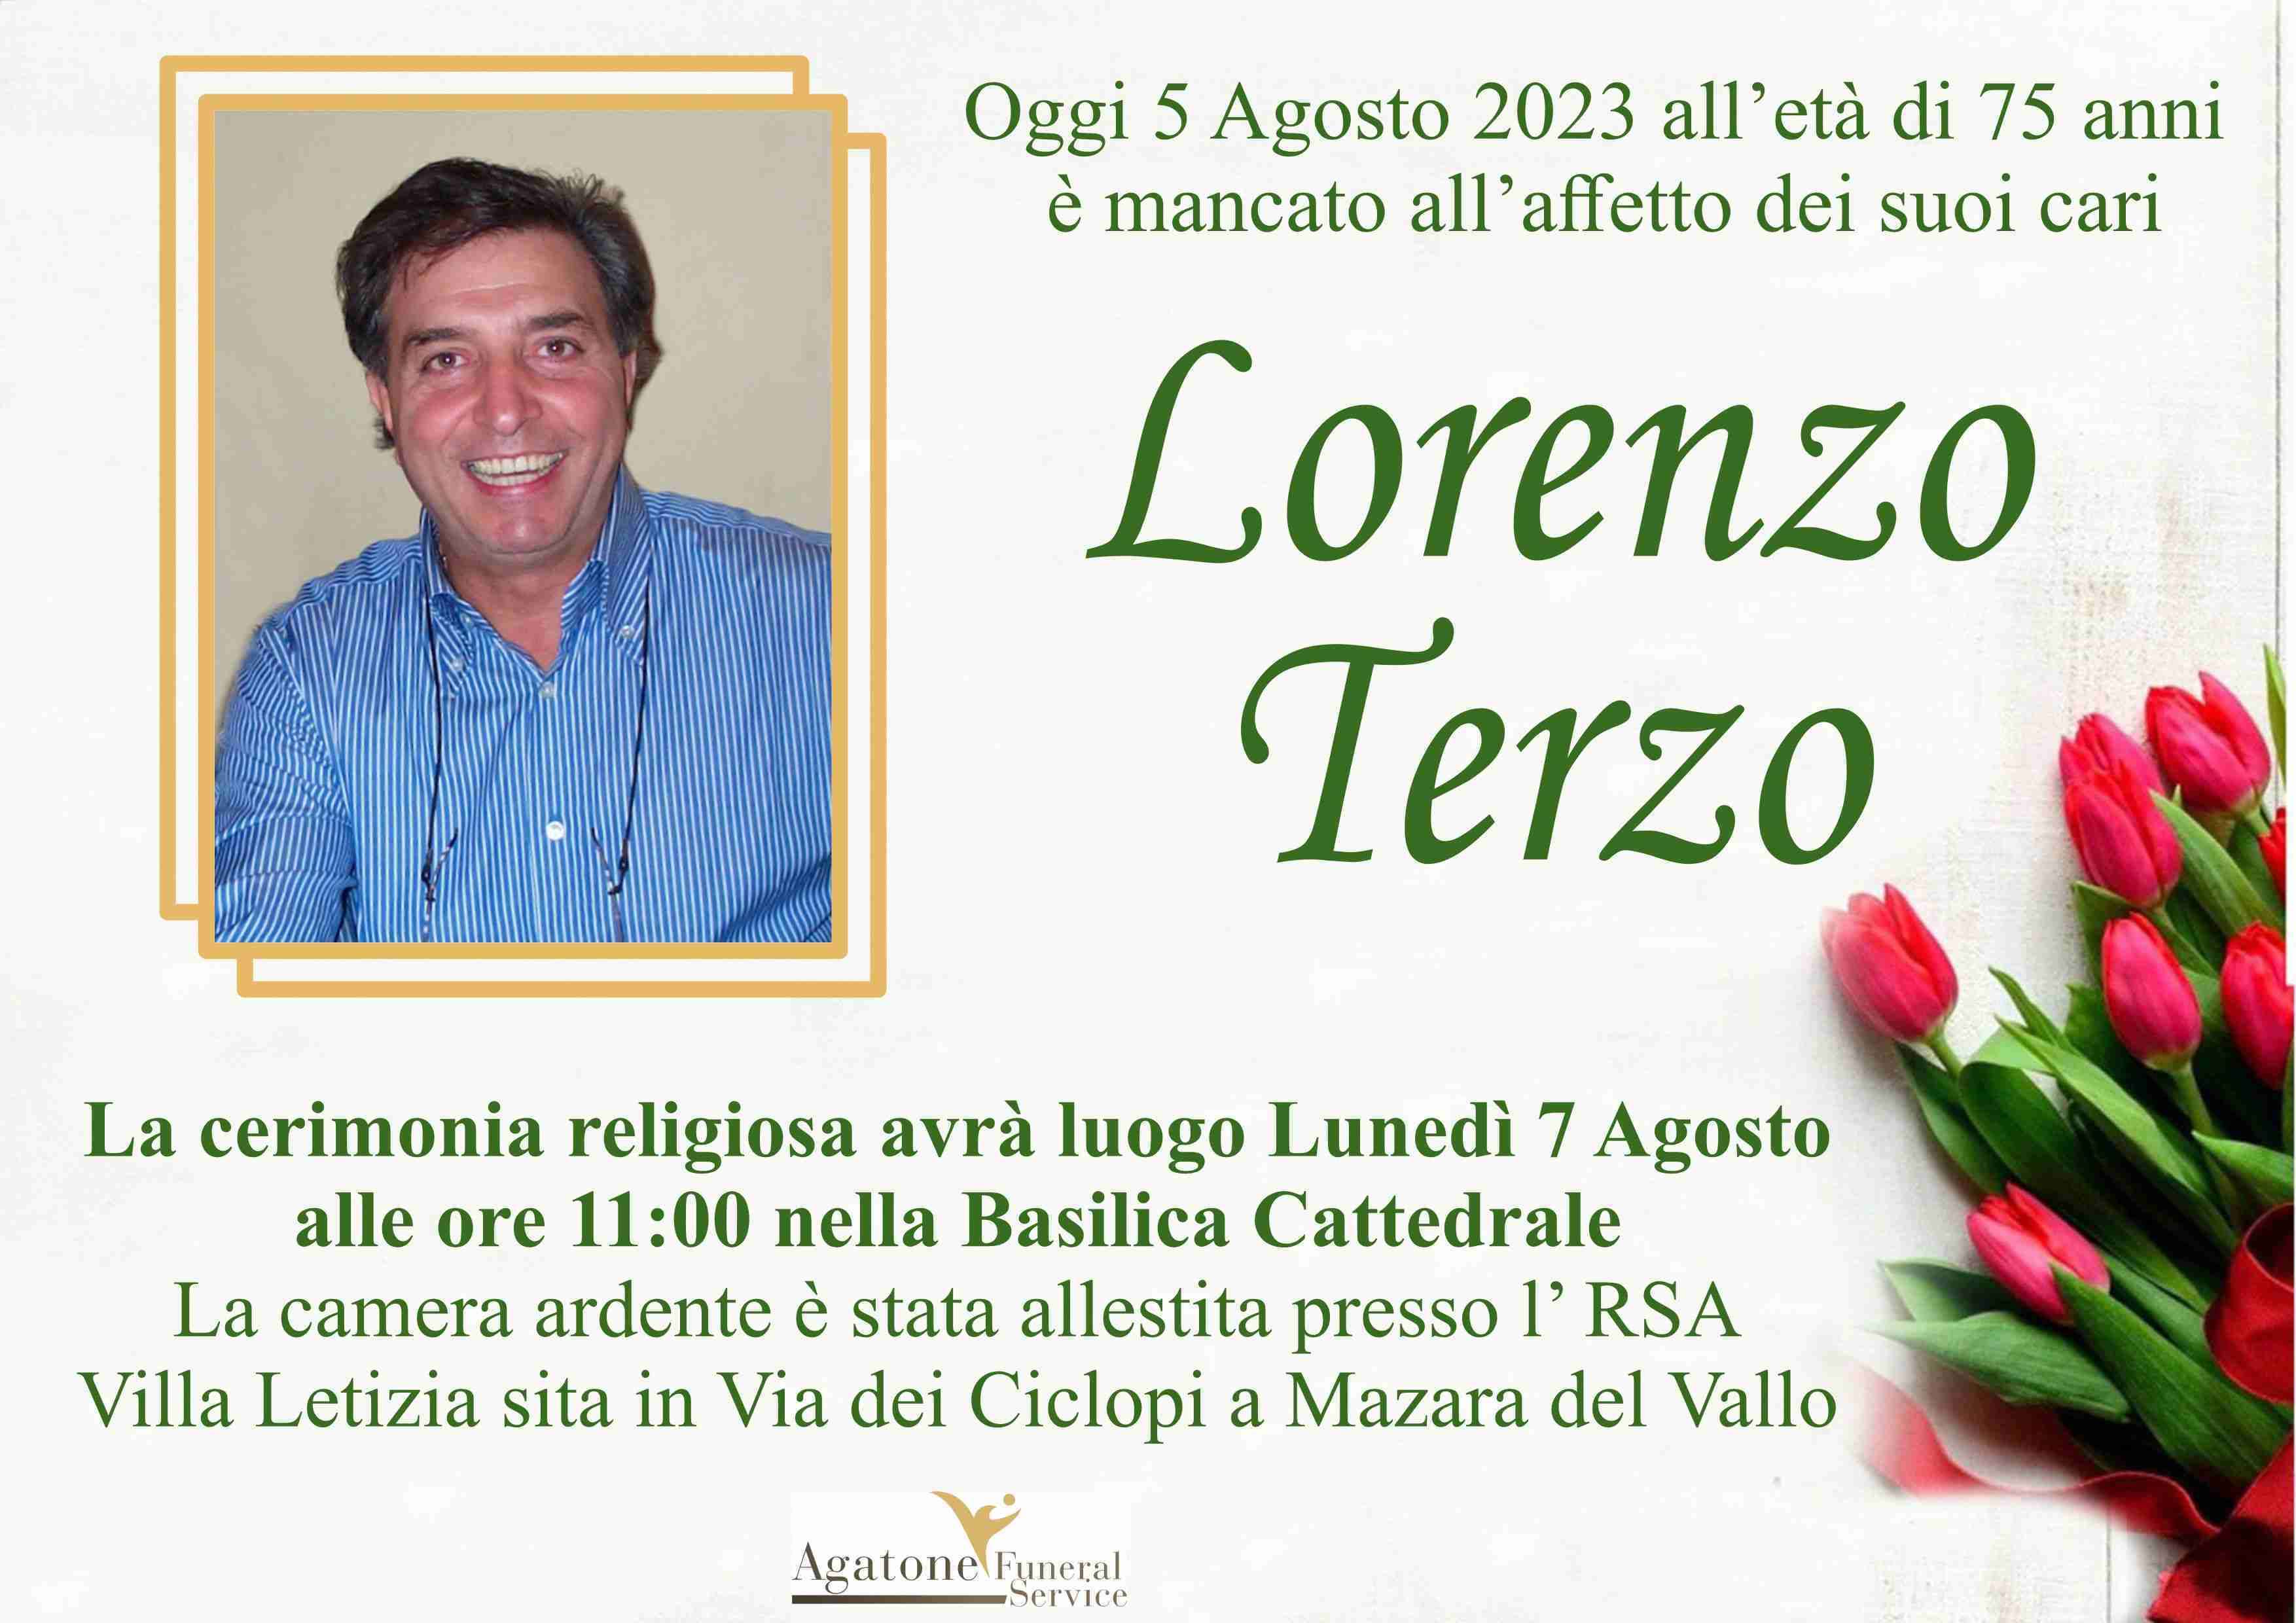 Lorenzo Terzo